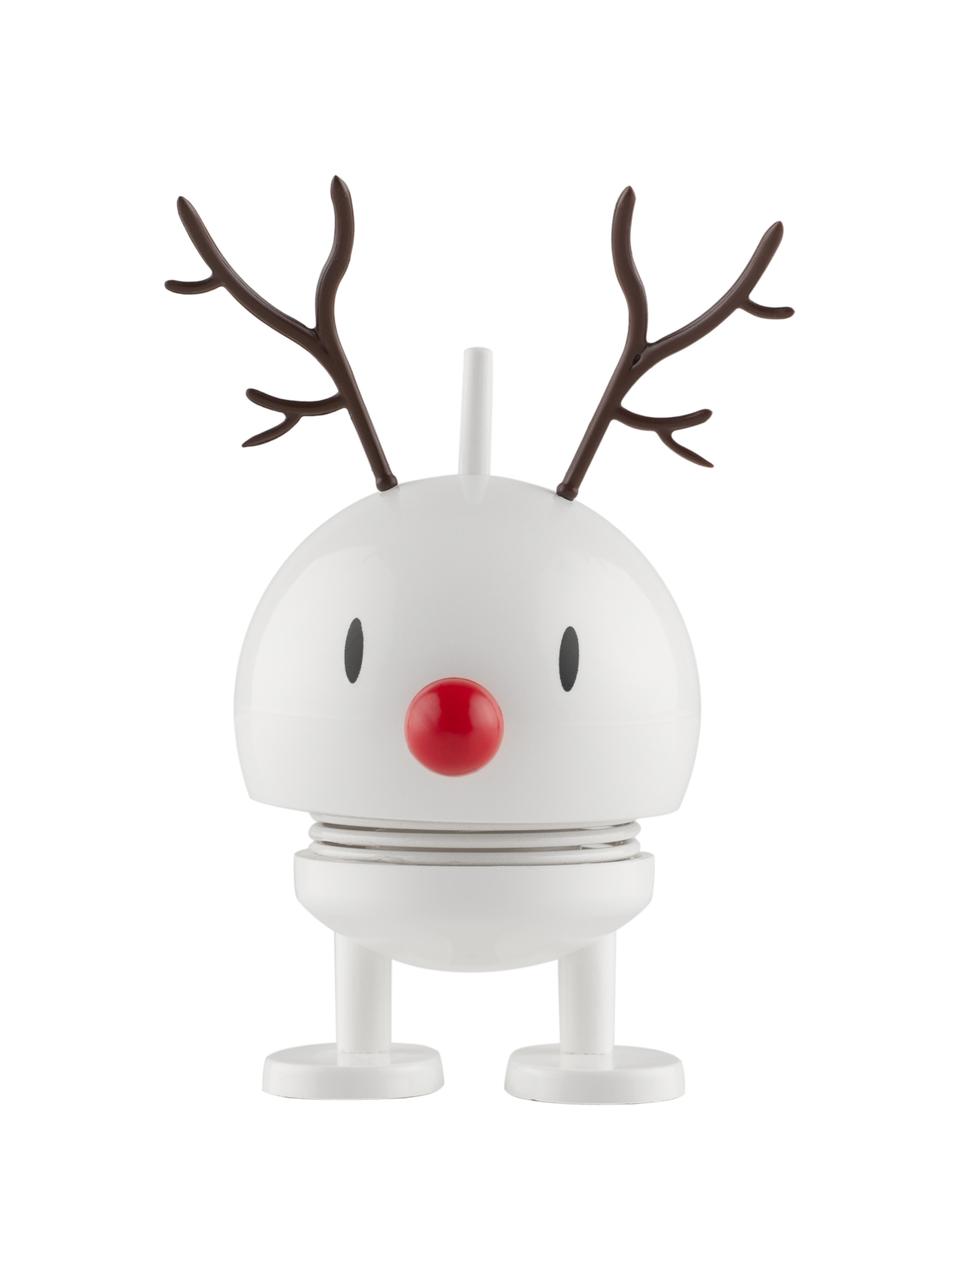 Figura decorativa Reindeer Bumble, Metal, plástico, Blanco, negro, rojo, Ø 5 x Al 9 cm